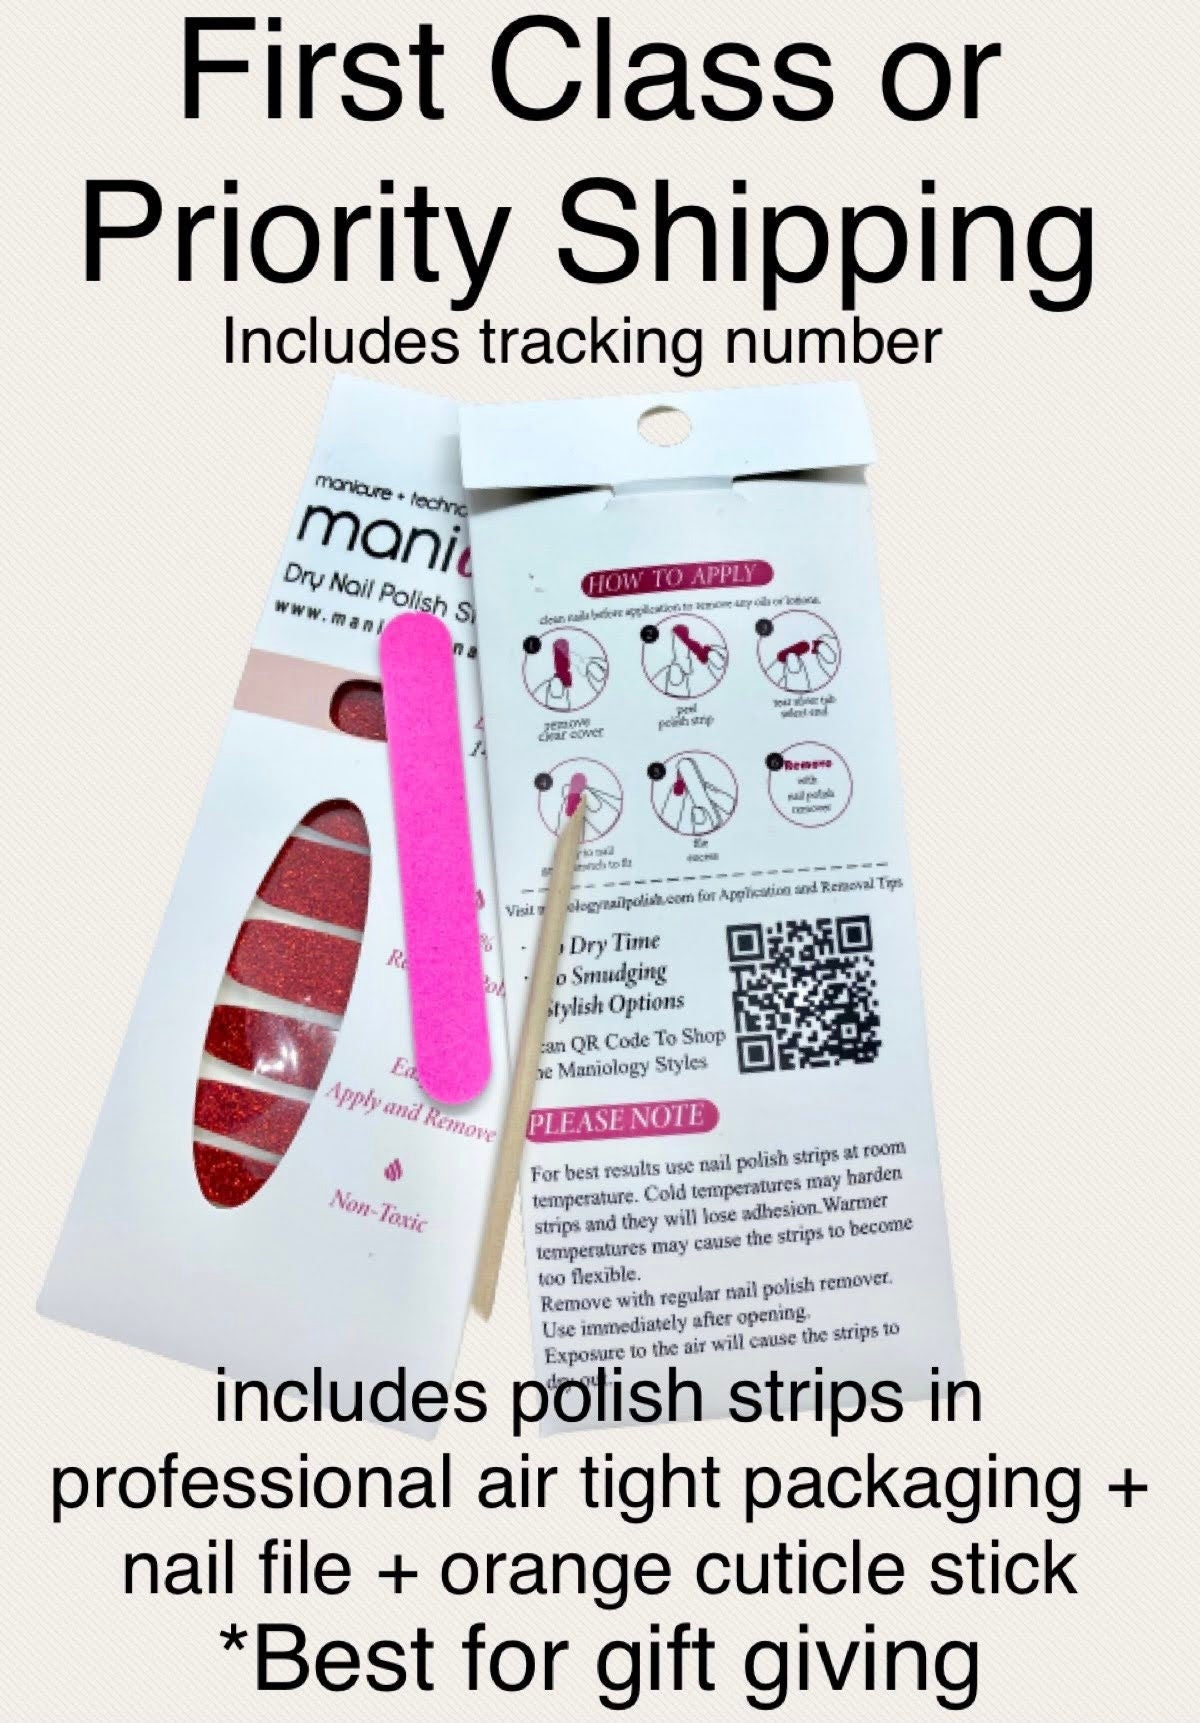 Fleur de lis/De Mask Design, ManiCURE  Real Nail Polish Strips, Dry Nail Polish, Nail Wraps, Stickers, Long Lasting, Non Toxic - manicurenailpolish